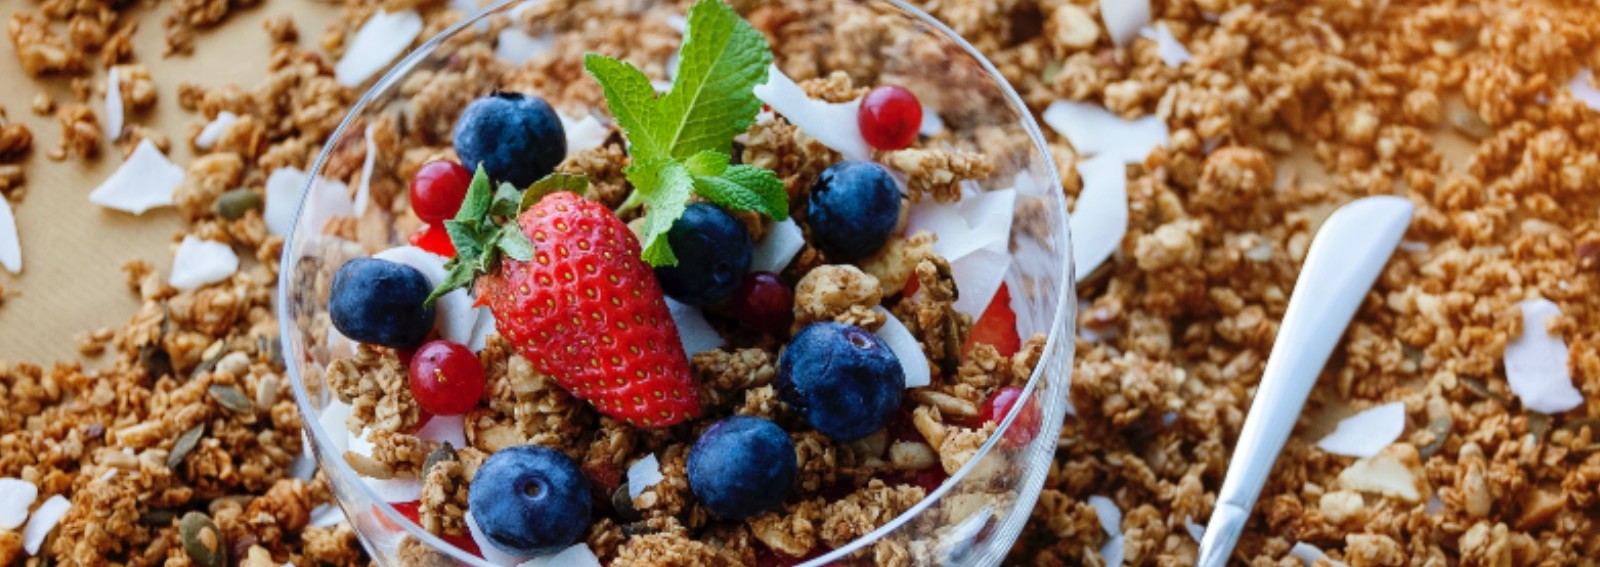 breakfast-granola-yogurt-health-fruit-blueberries